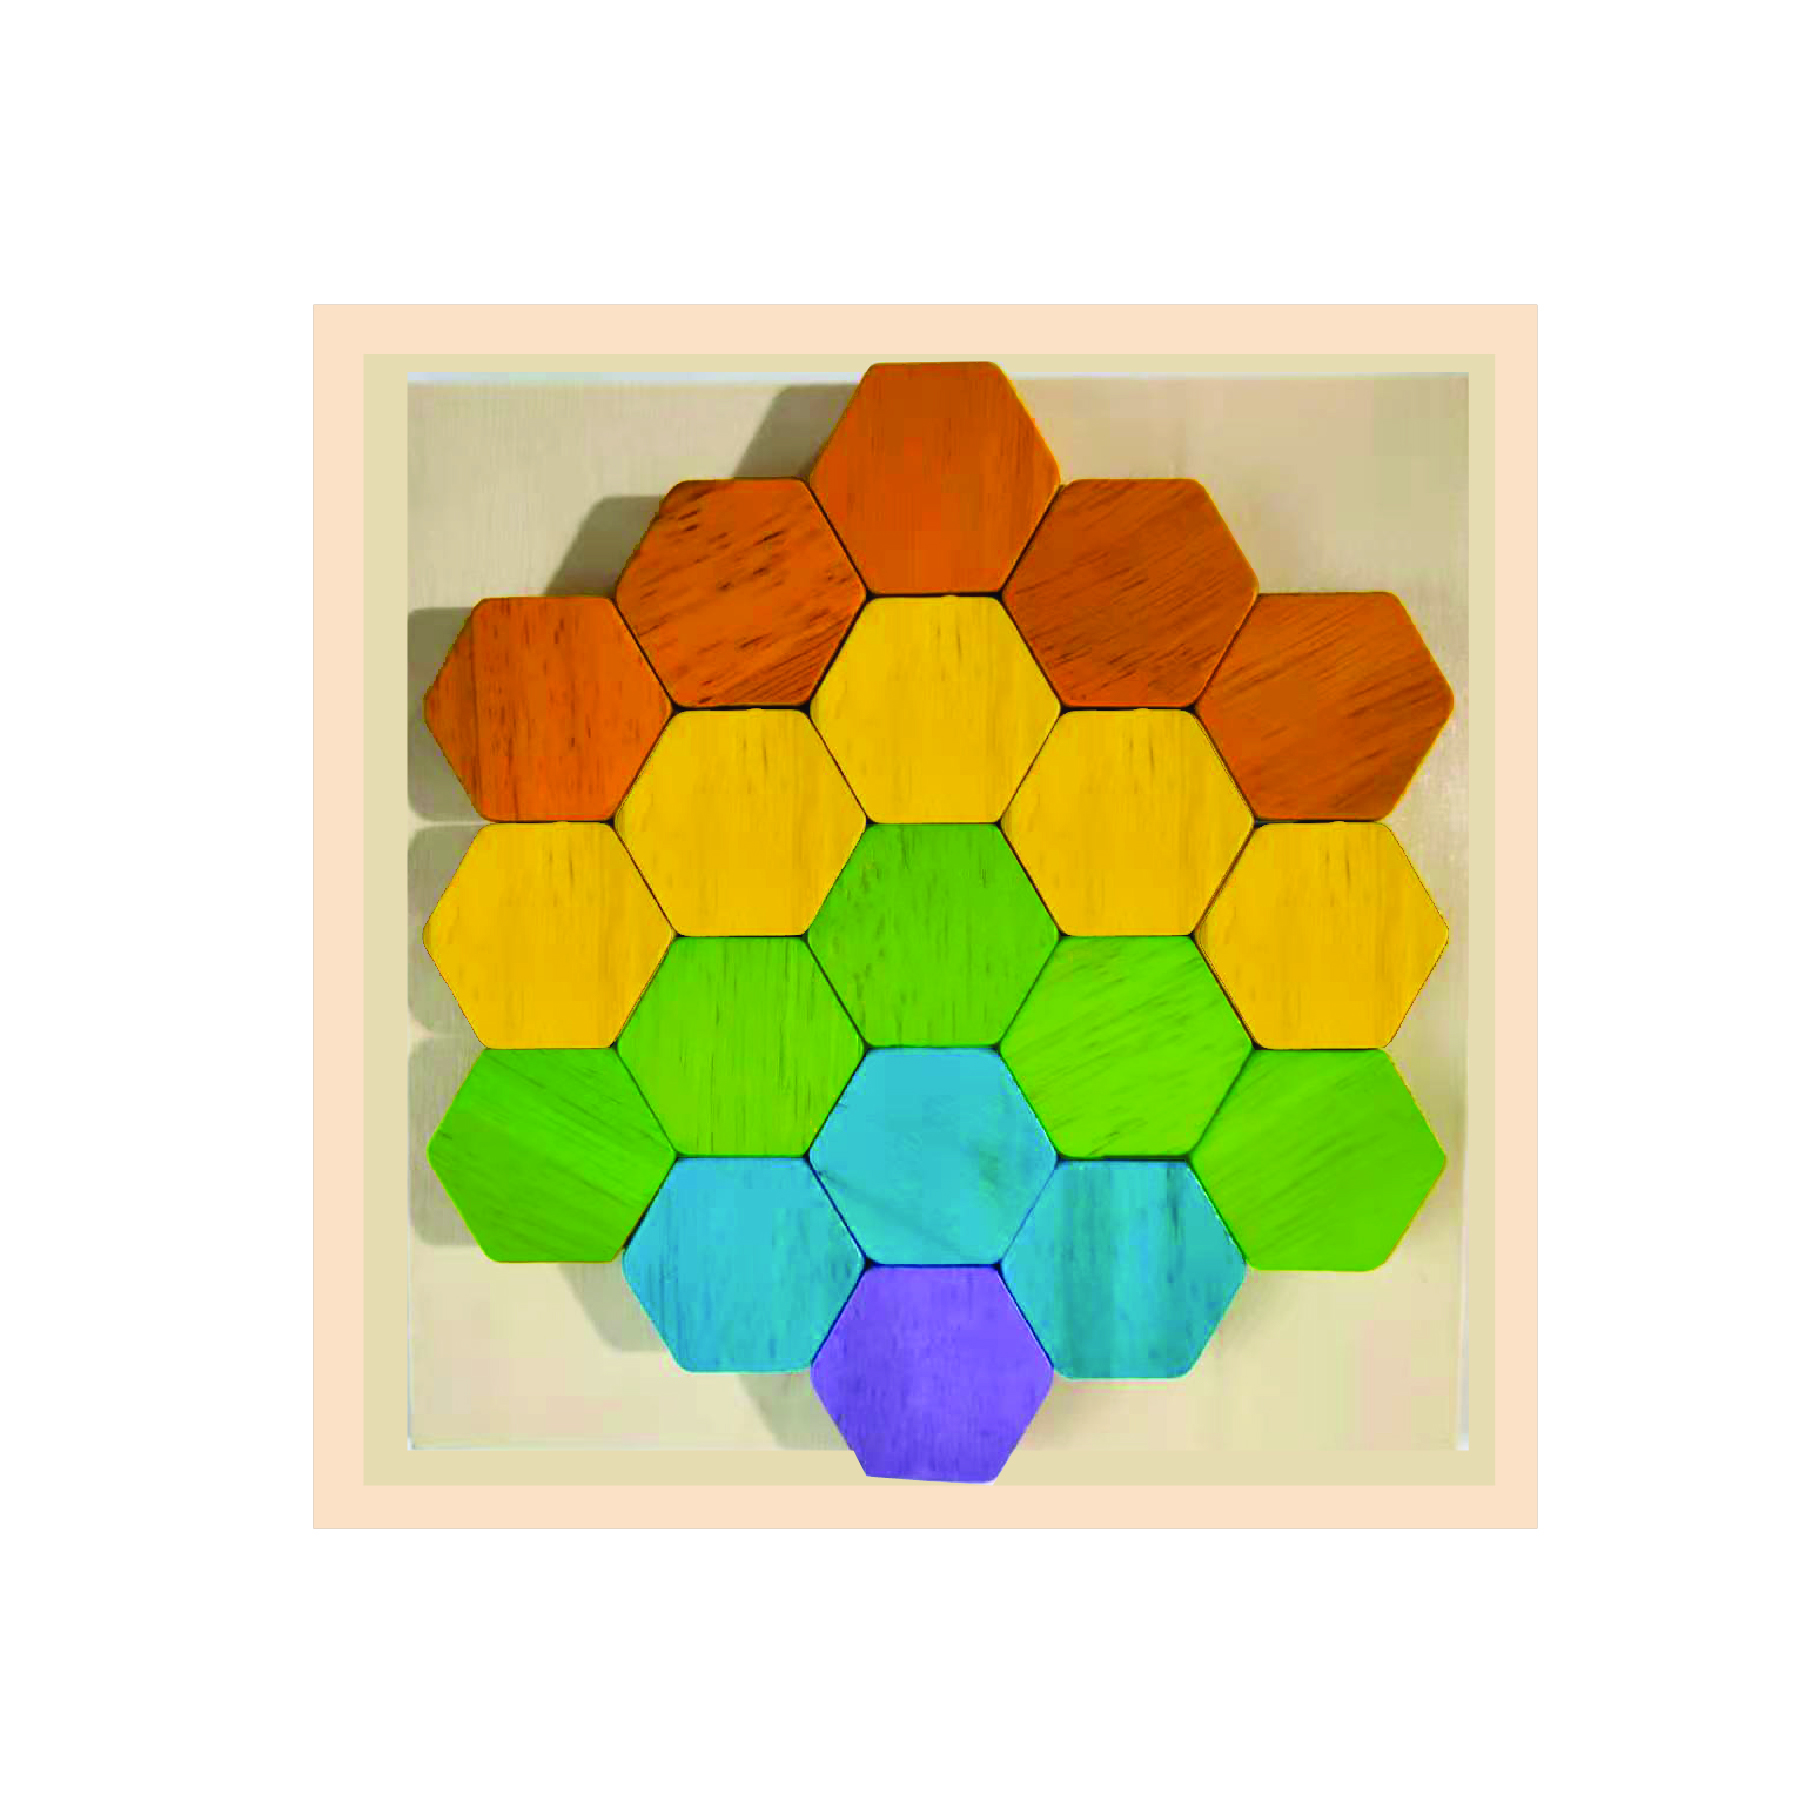 Hexagon Matching Puzzle